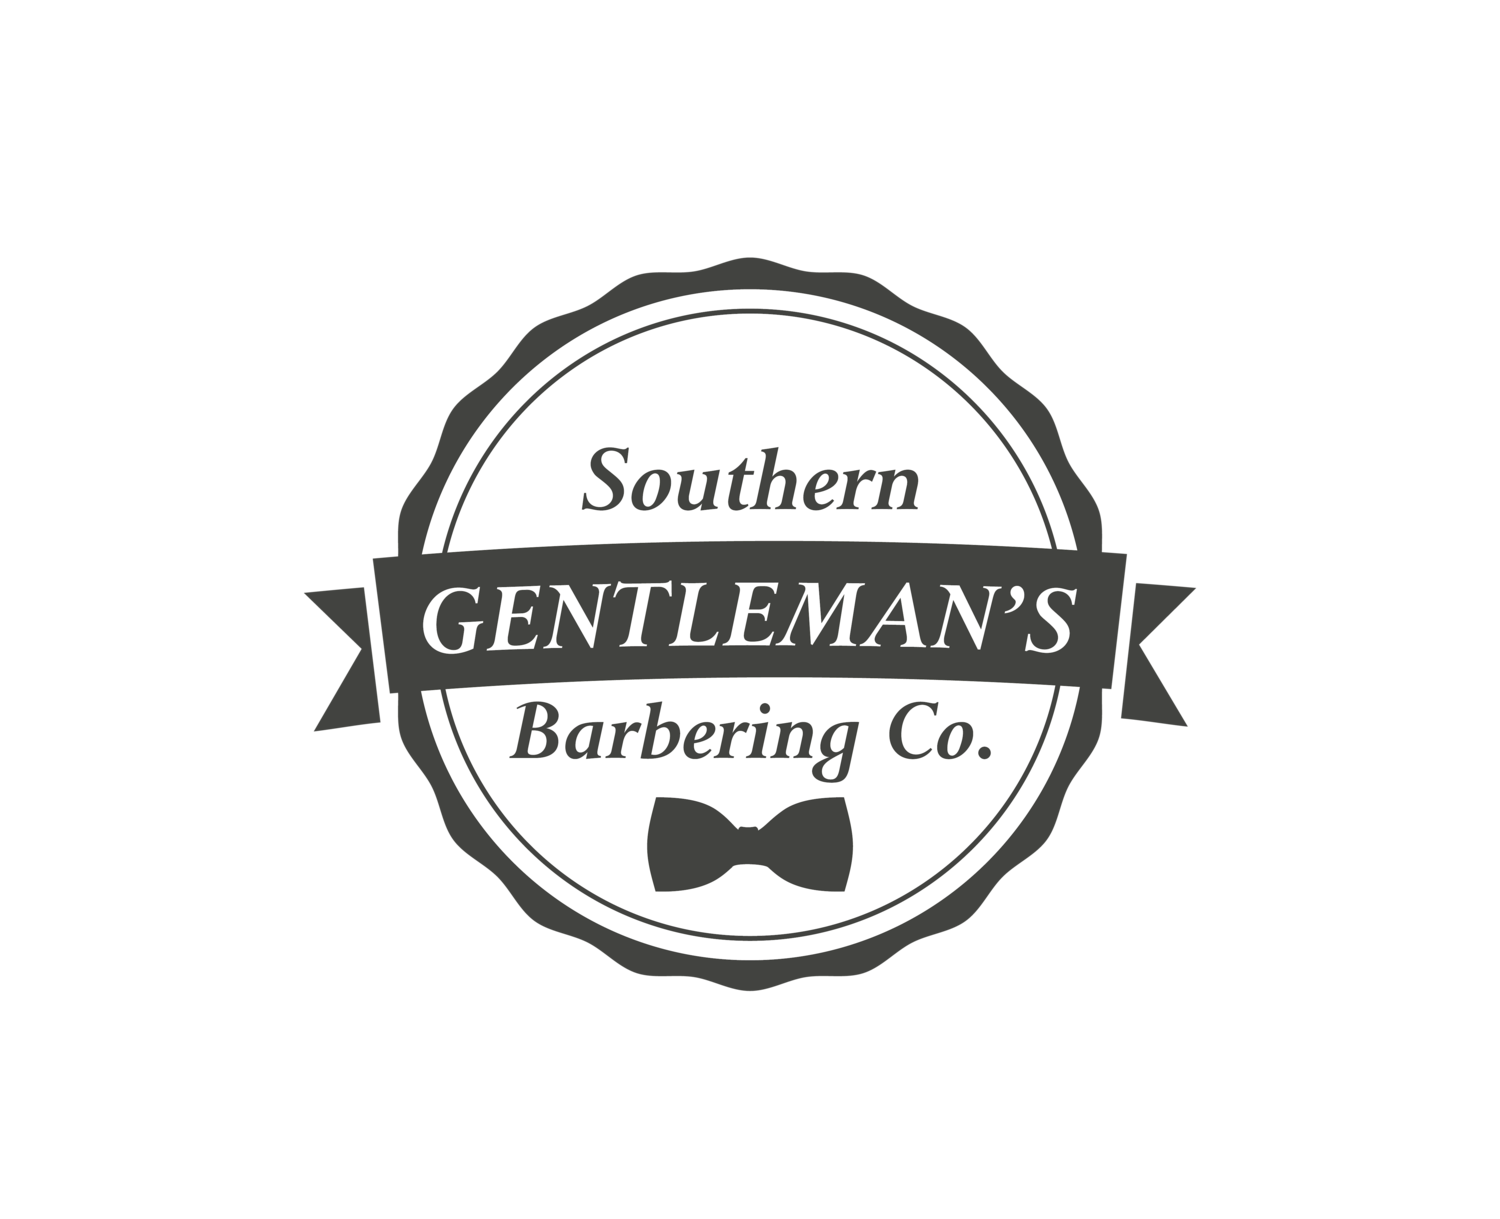 Southern Gentleman's Barbering Co.